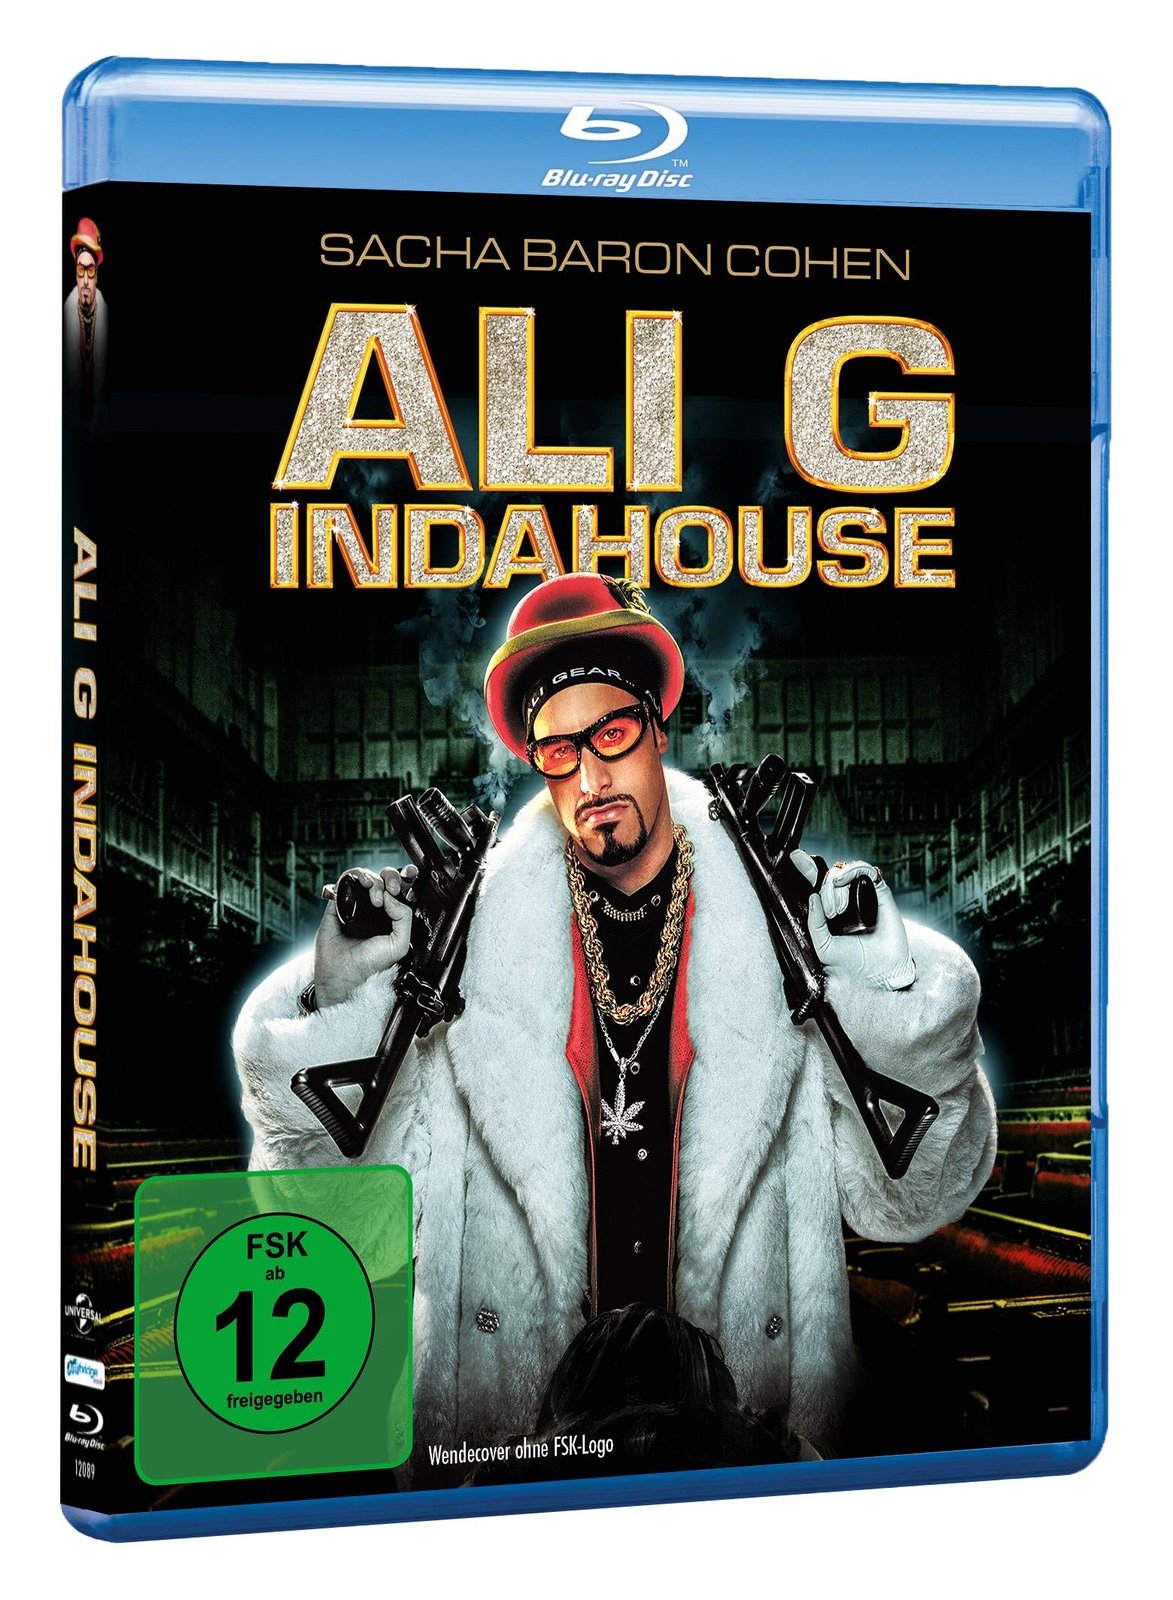 Ali G - In Da House (blu-ray)